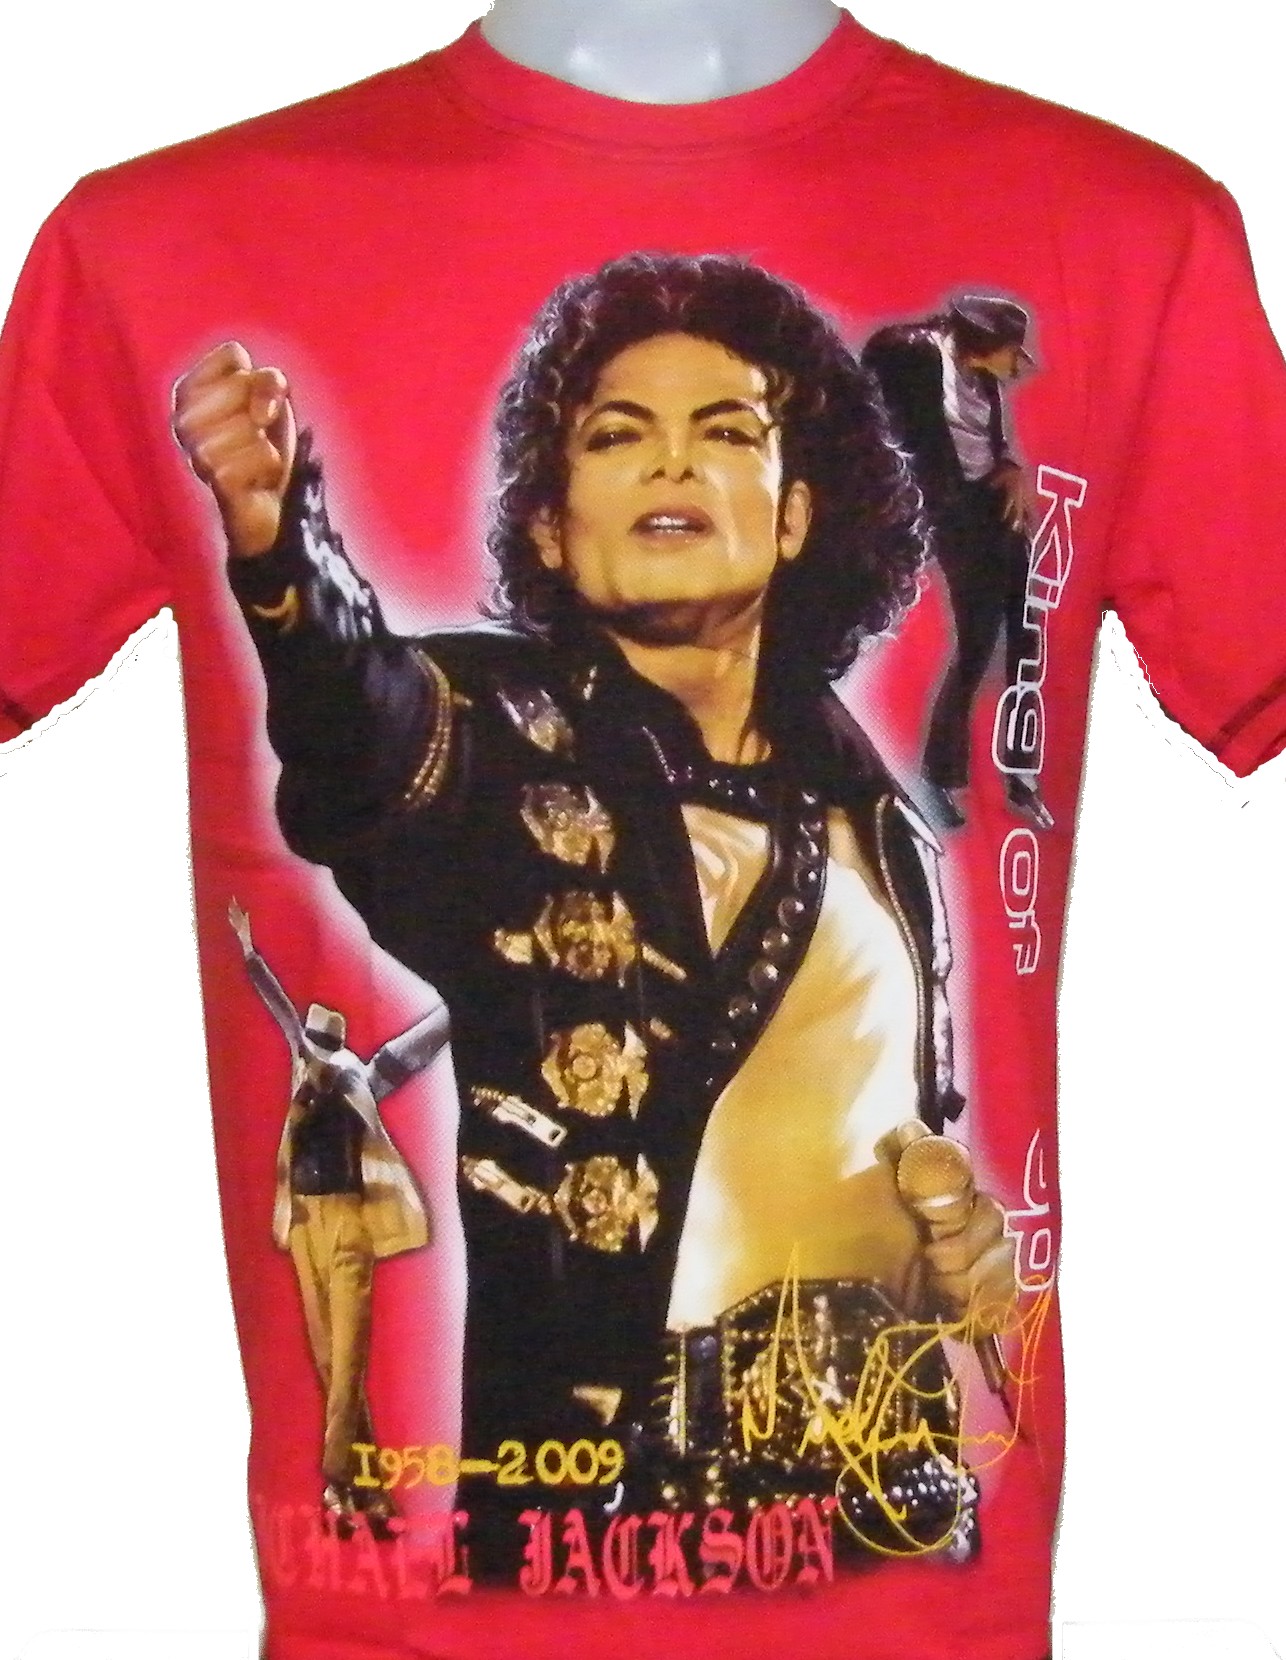 Michael Jackson t-shirt size M